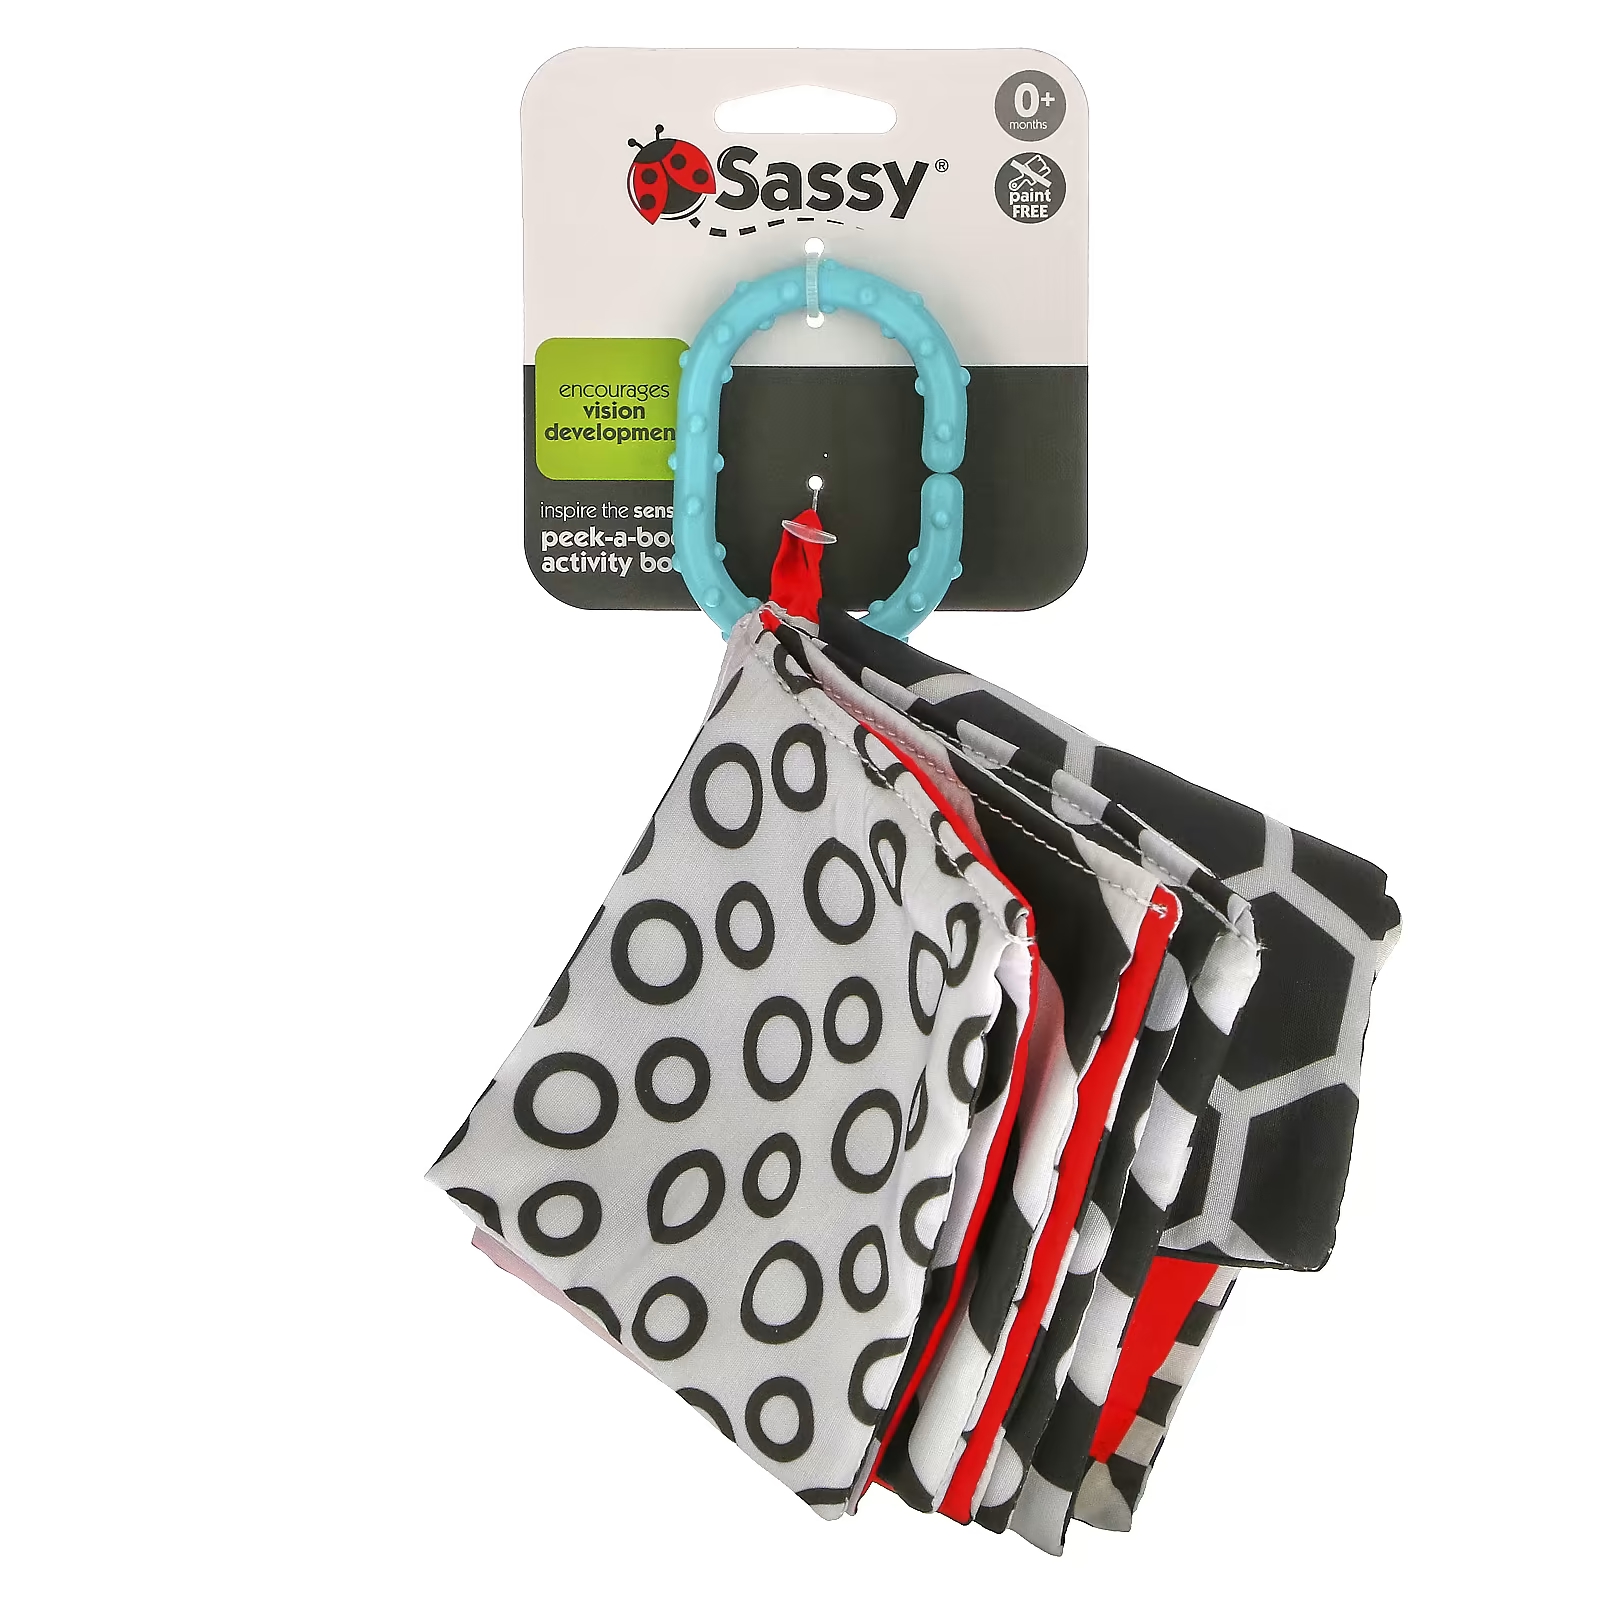 Развивающая тетрадь Sassy Inspire The Senses Peek-A-Boo для детей от 0 месяцев, 1 шт. цена и фото